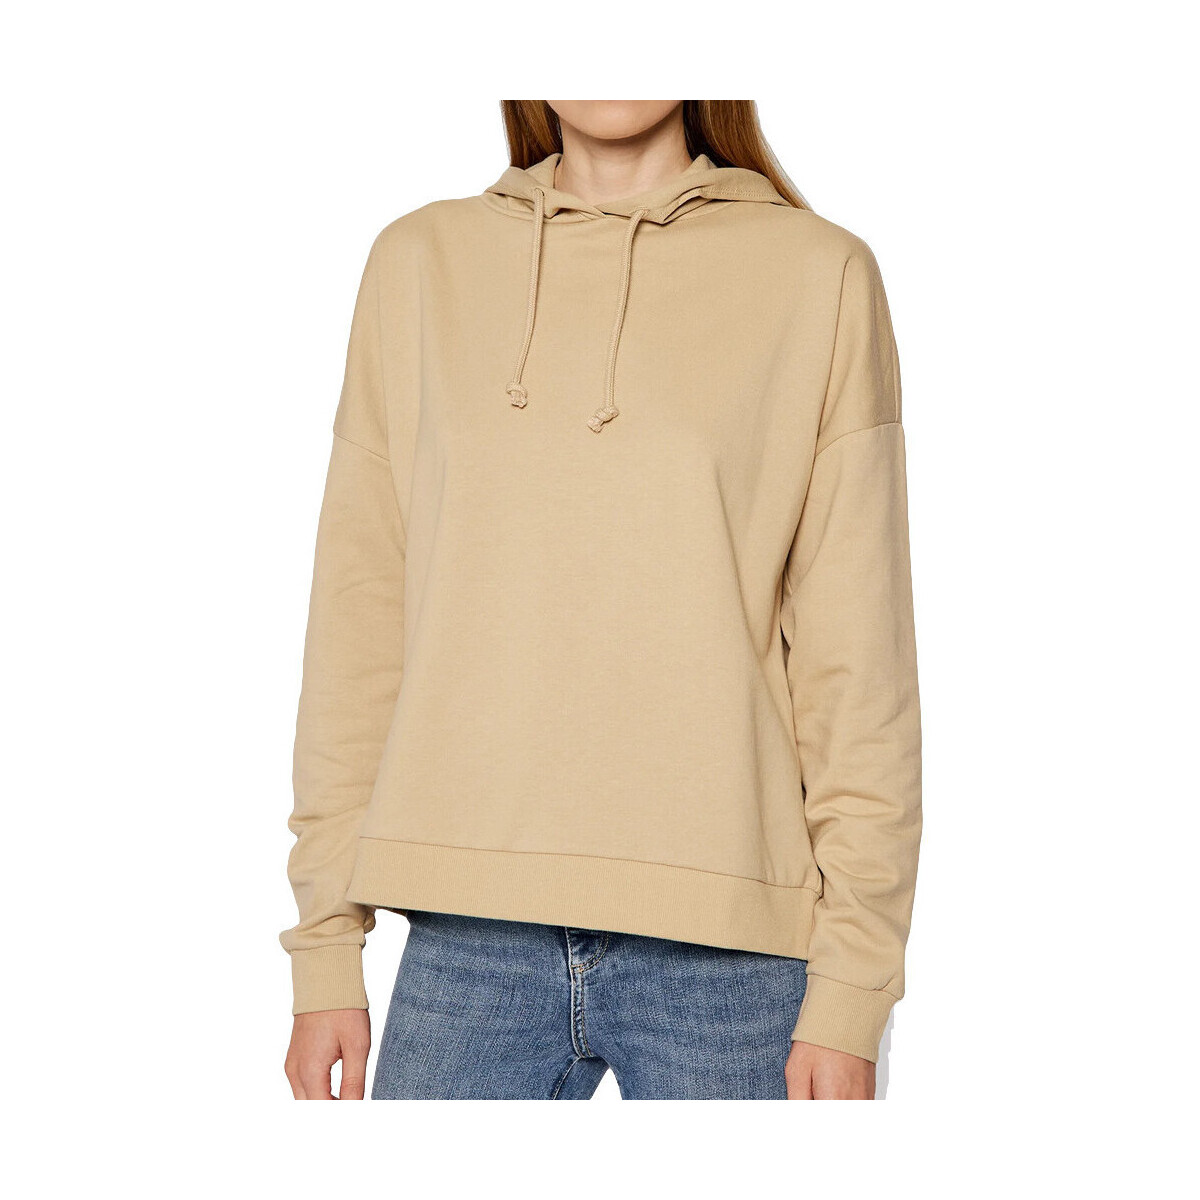 Textiel Dames Sweaters / Sweatshirts Vero Moda  Beige